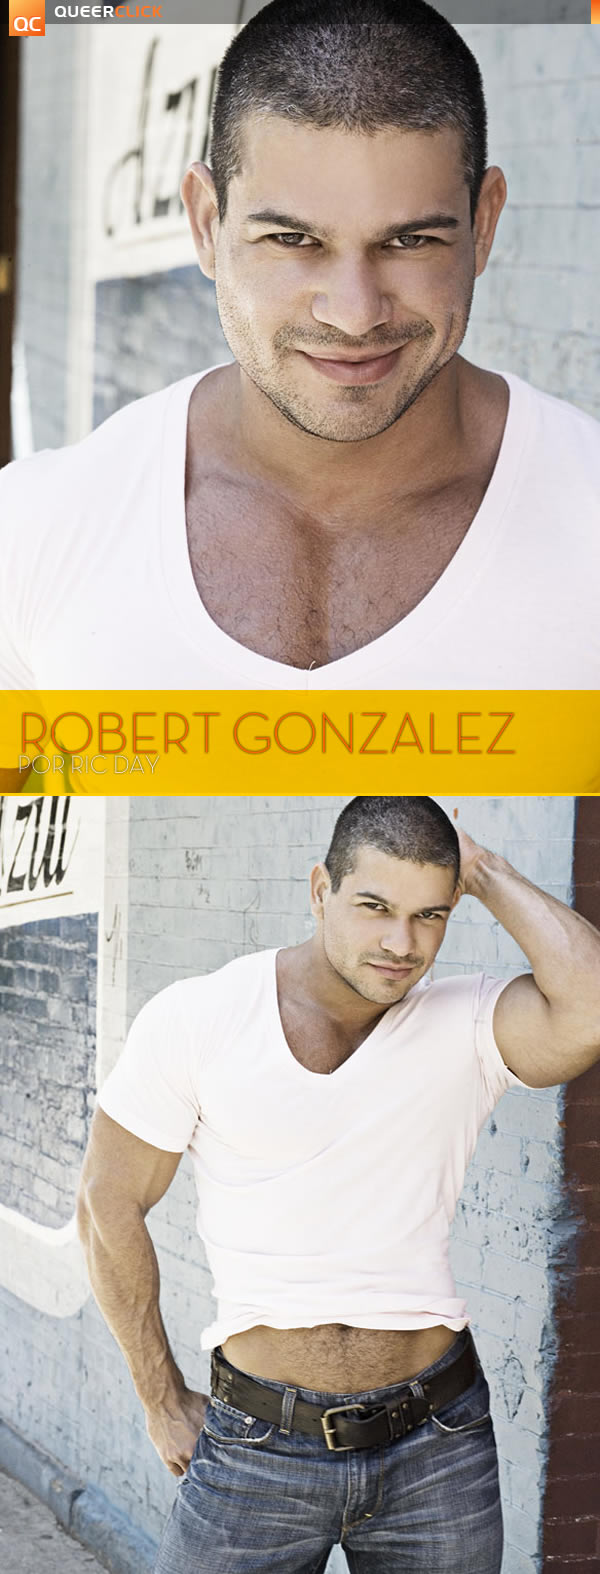 Rick Day: Robert Gonzalez